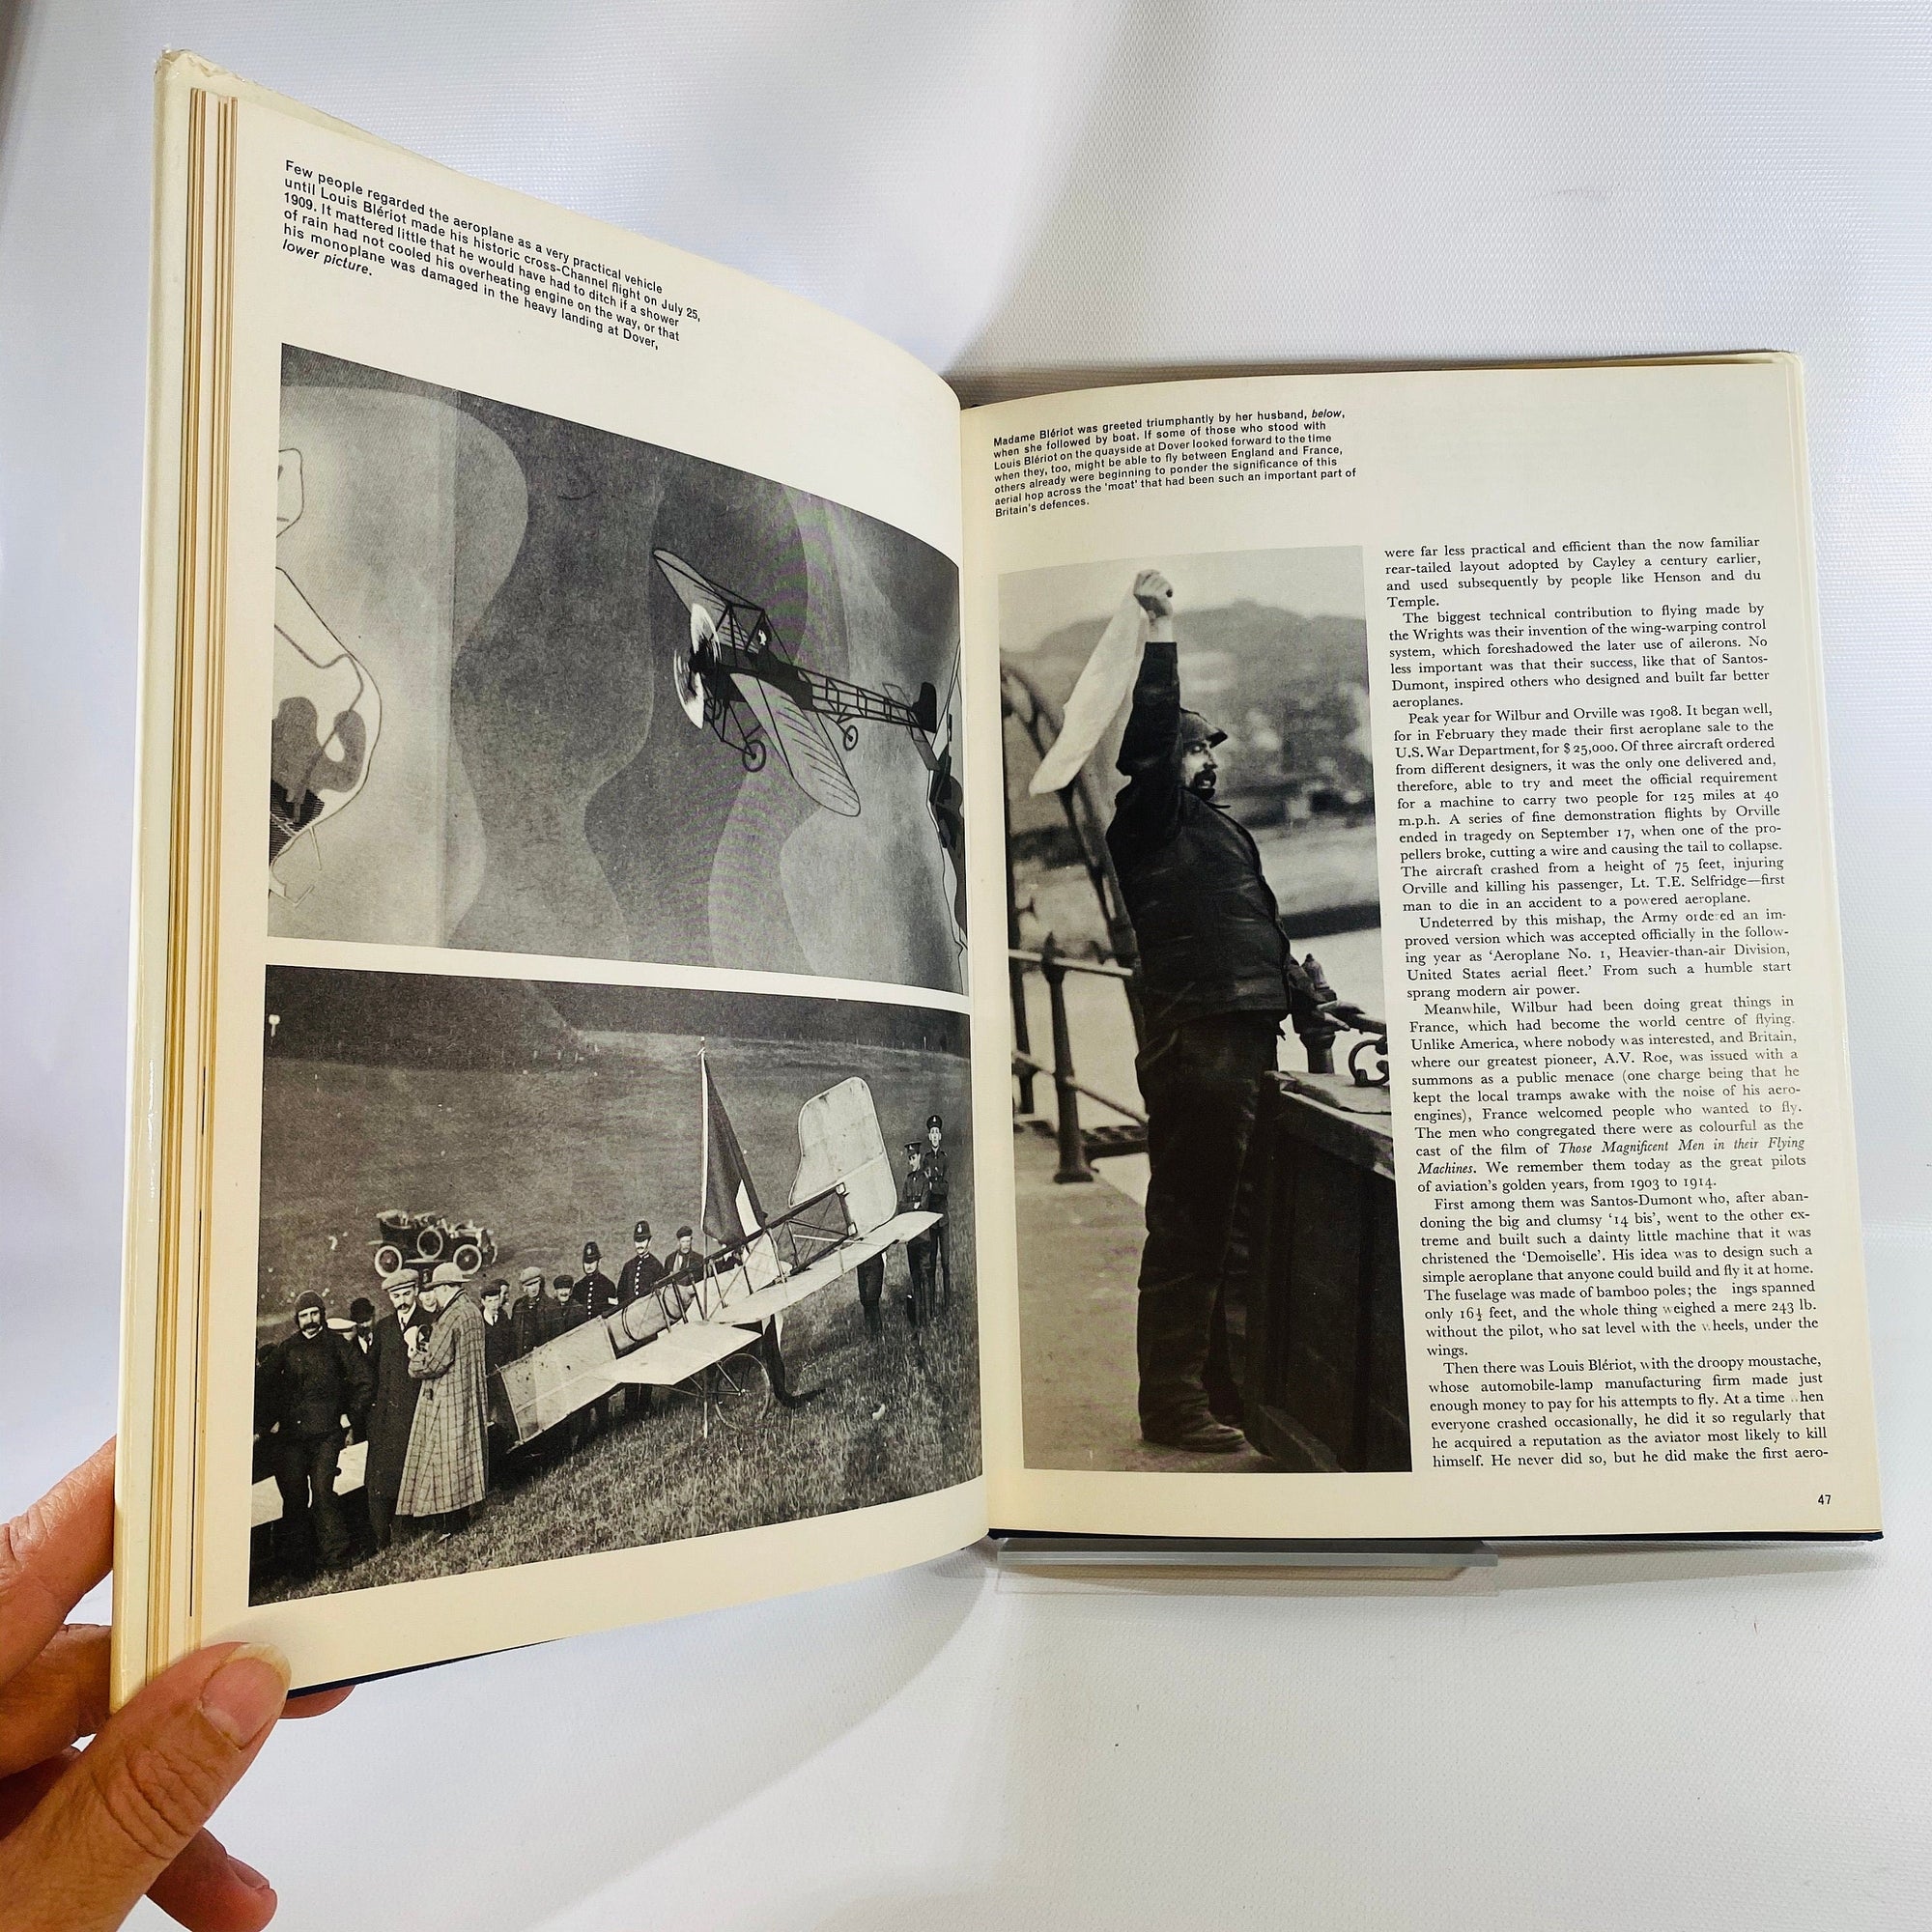 Aircraft Aircraft by John W.R. Taylor 1972 Vintage Book